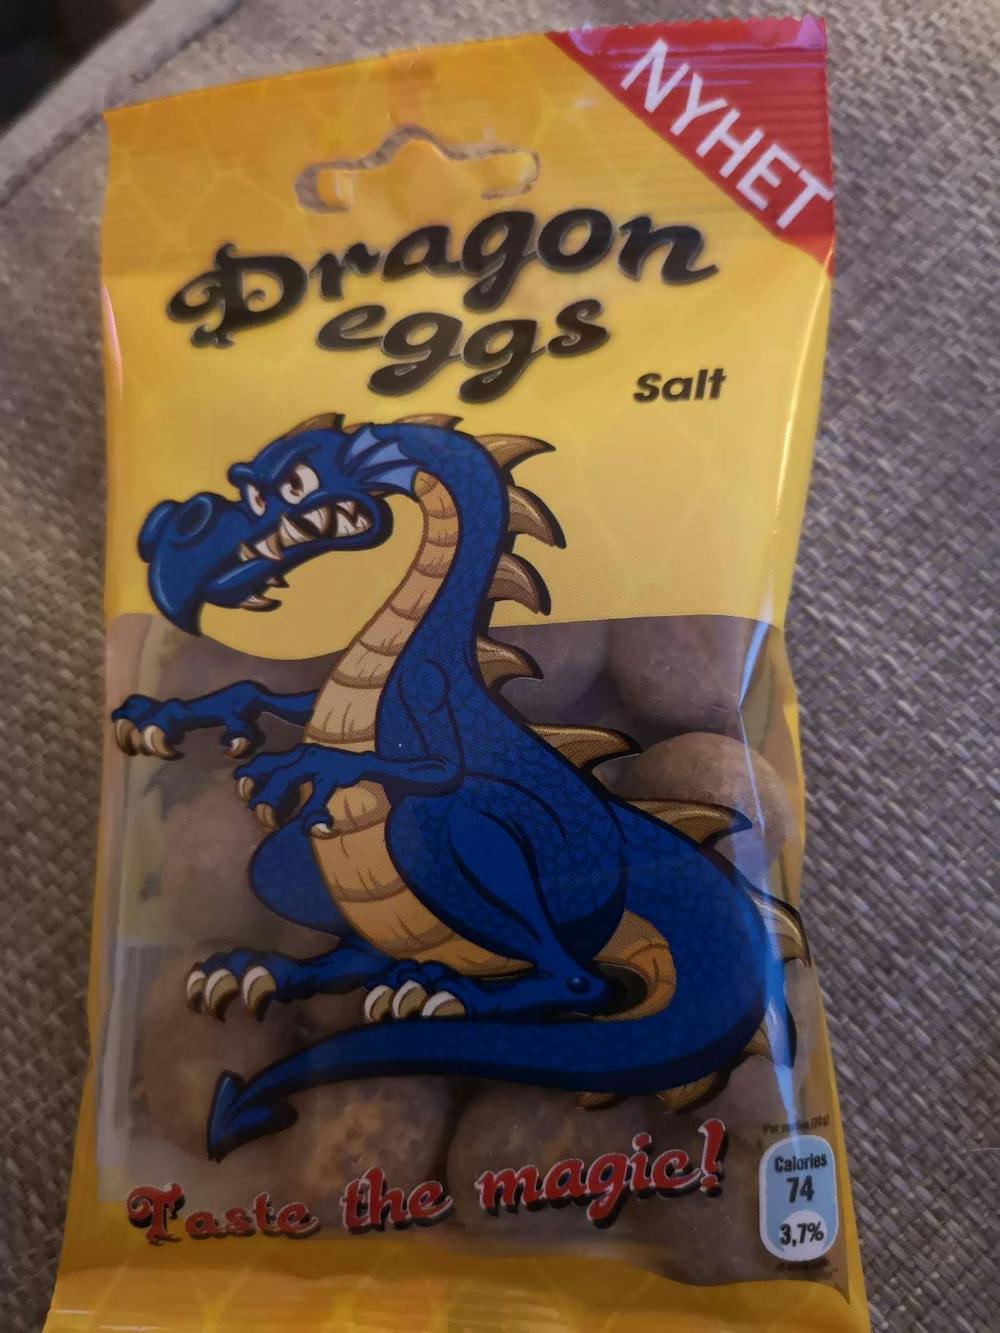 Dragon eggs salt, 